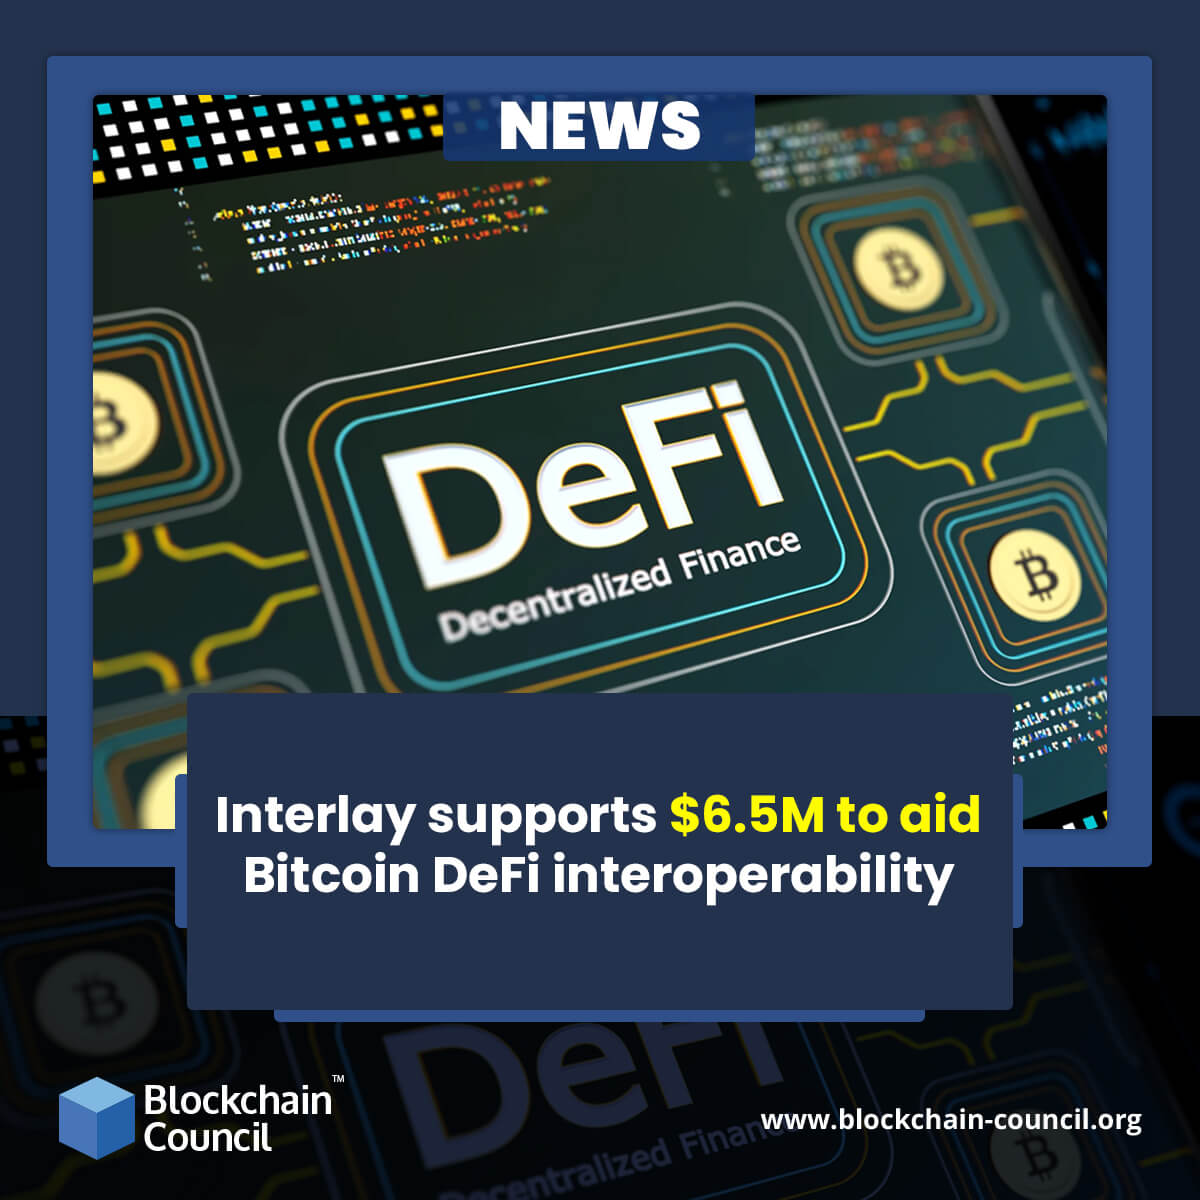 Interlay supports $6.5M to aid Bitcoin DeFi interoperability